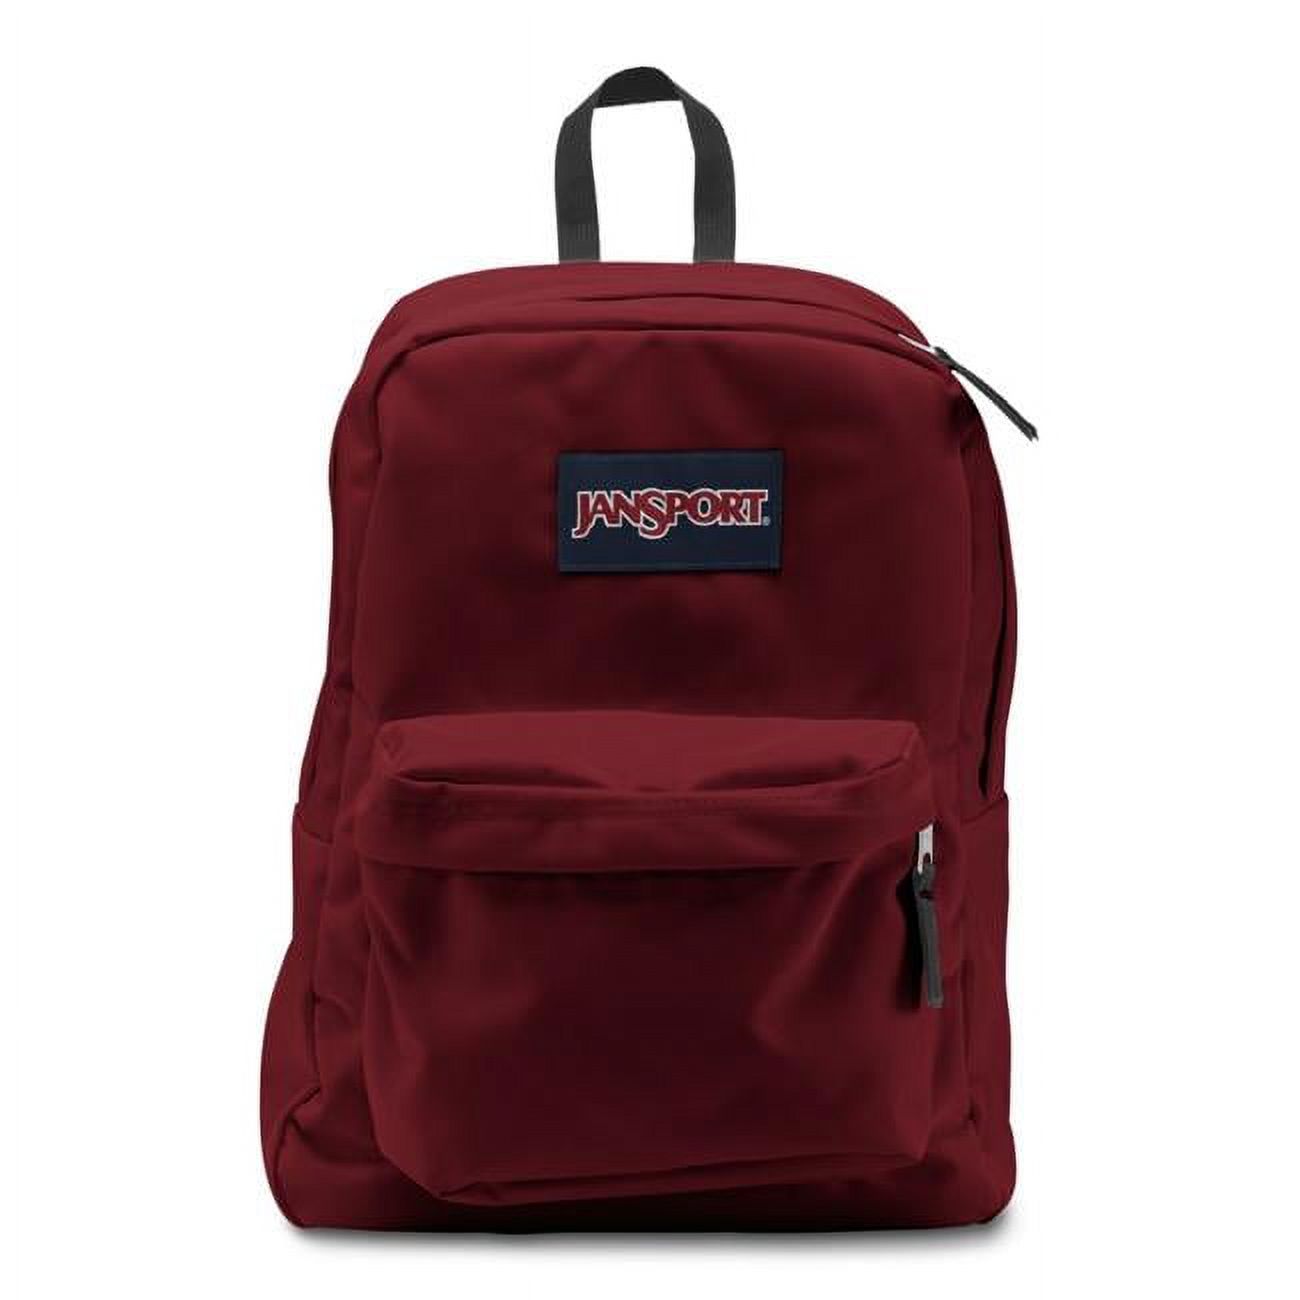 Superbreak School Backpack - Viking Red - Silver - image 1 of 5